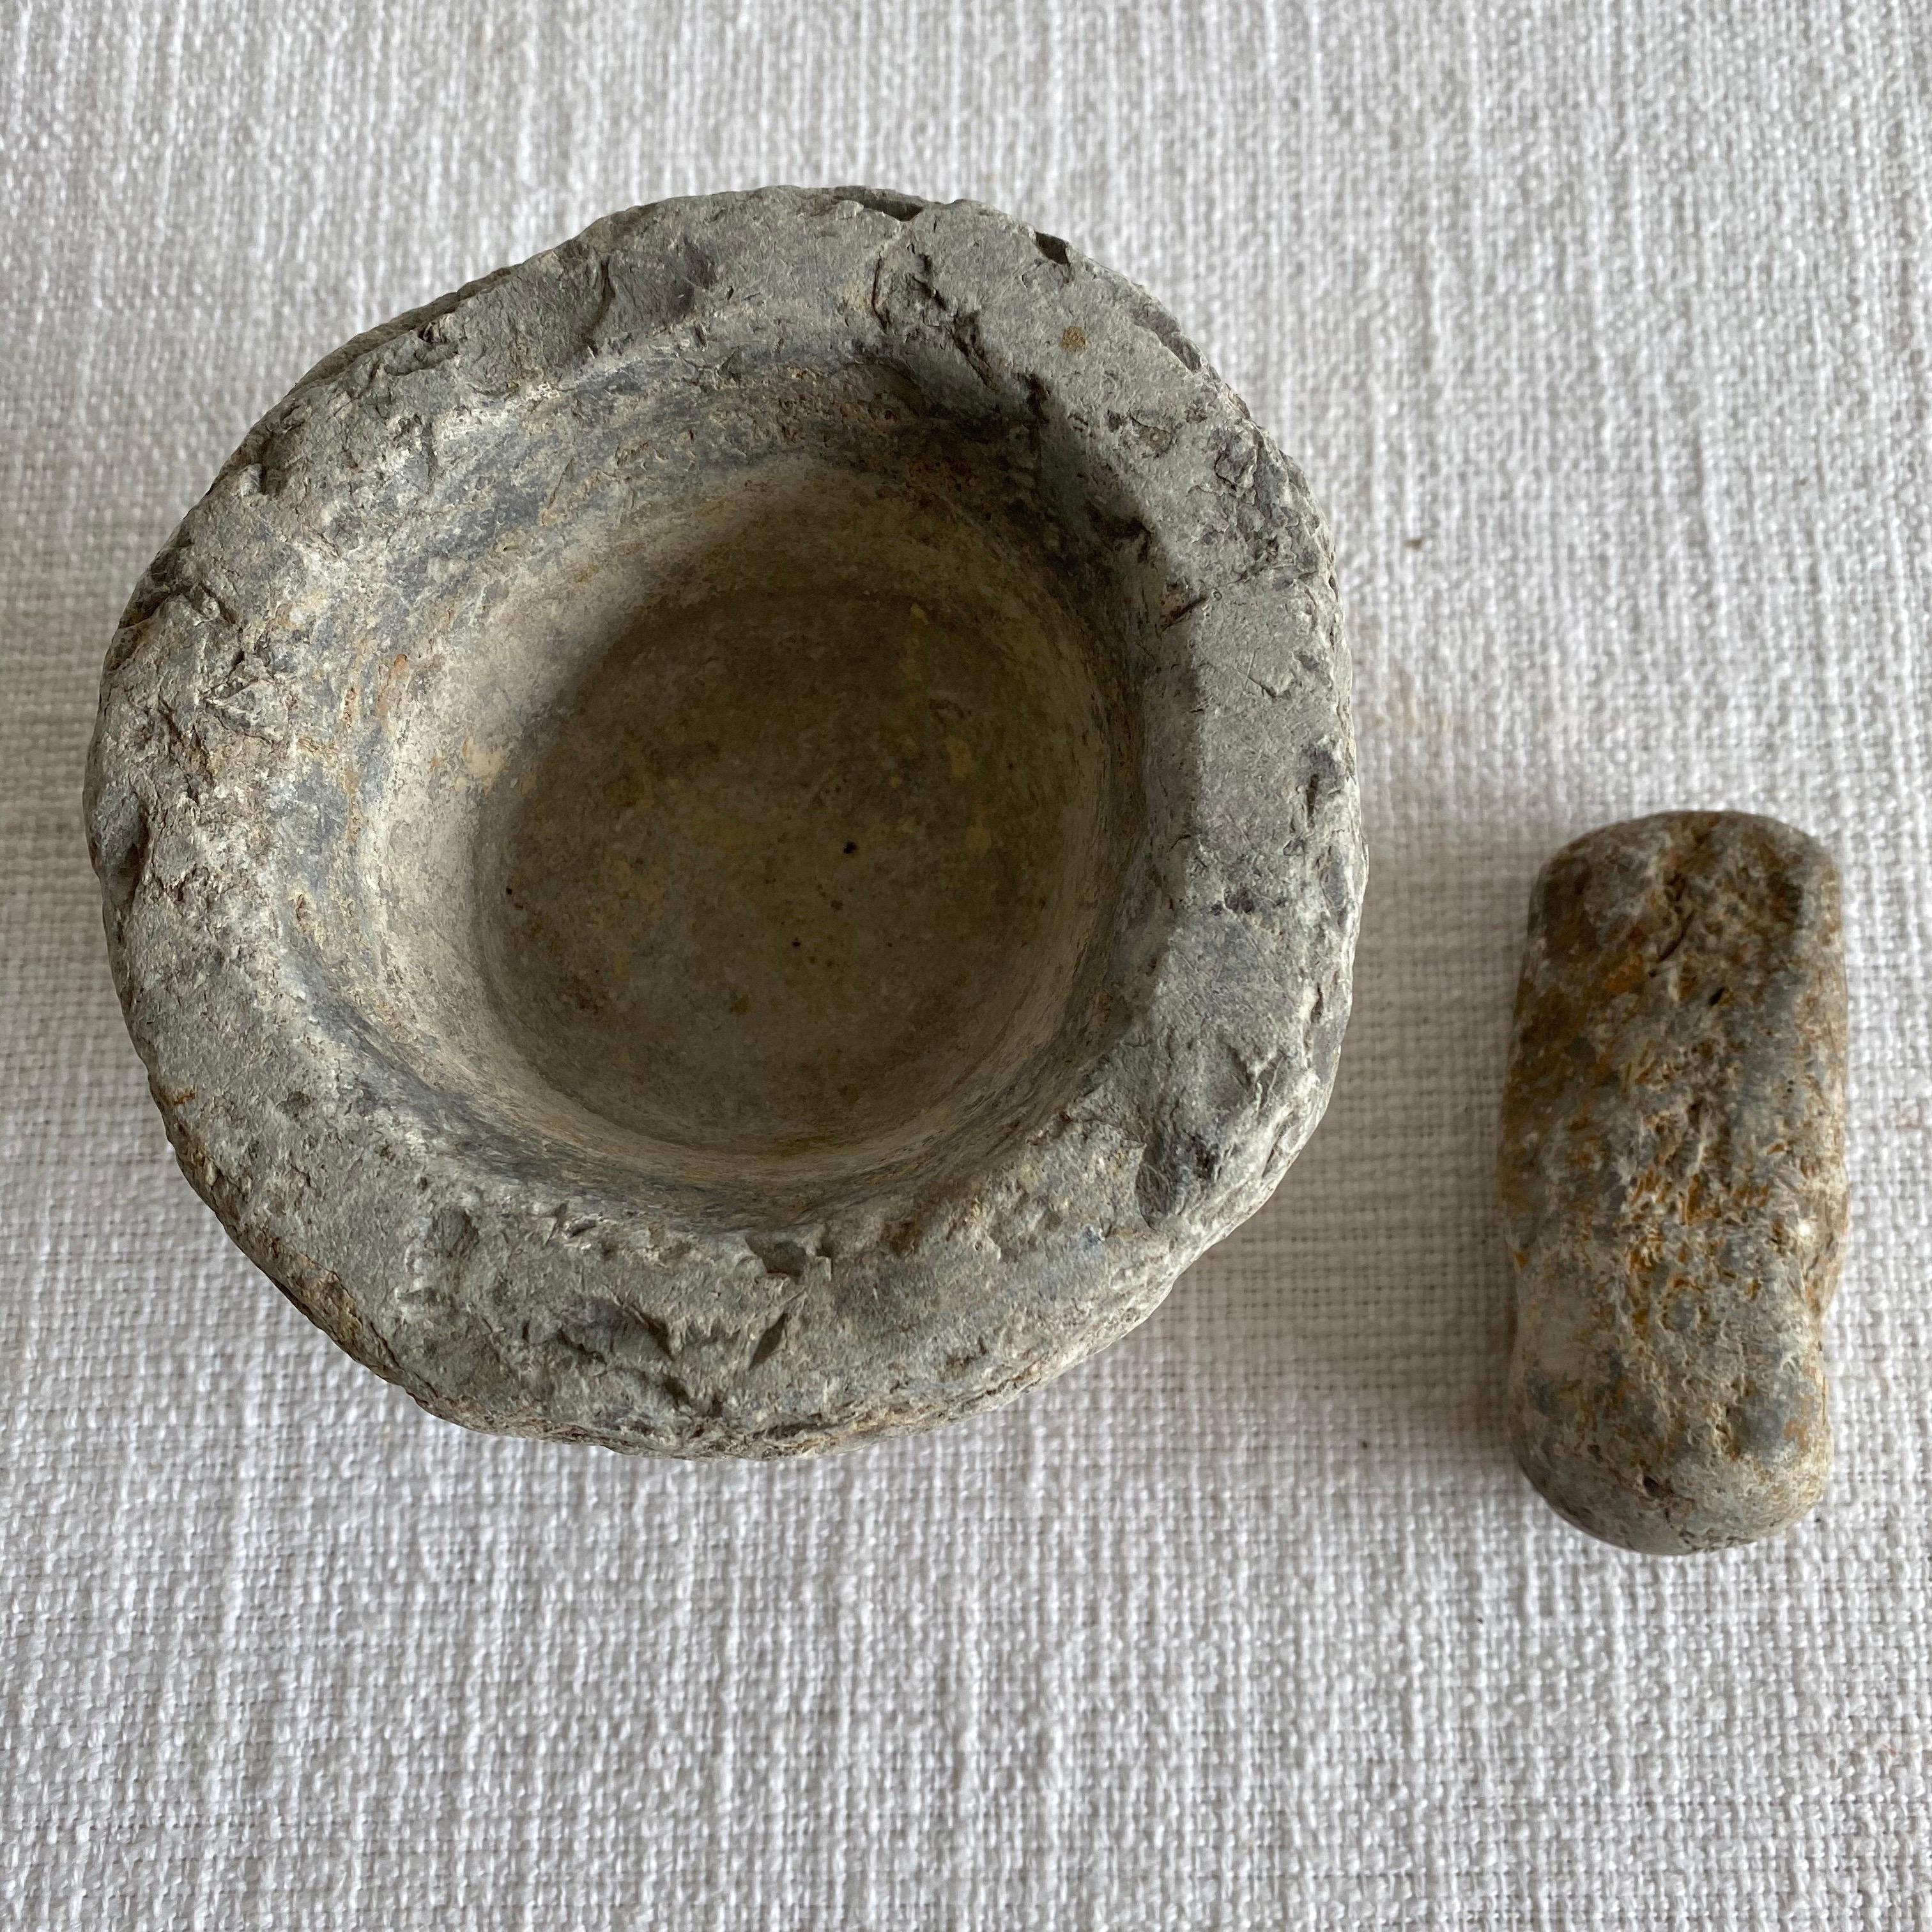 Antique mortar and pestle stone bowl set
Size: 5.5